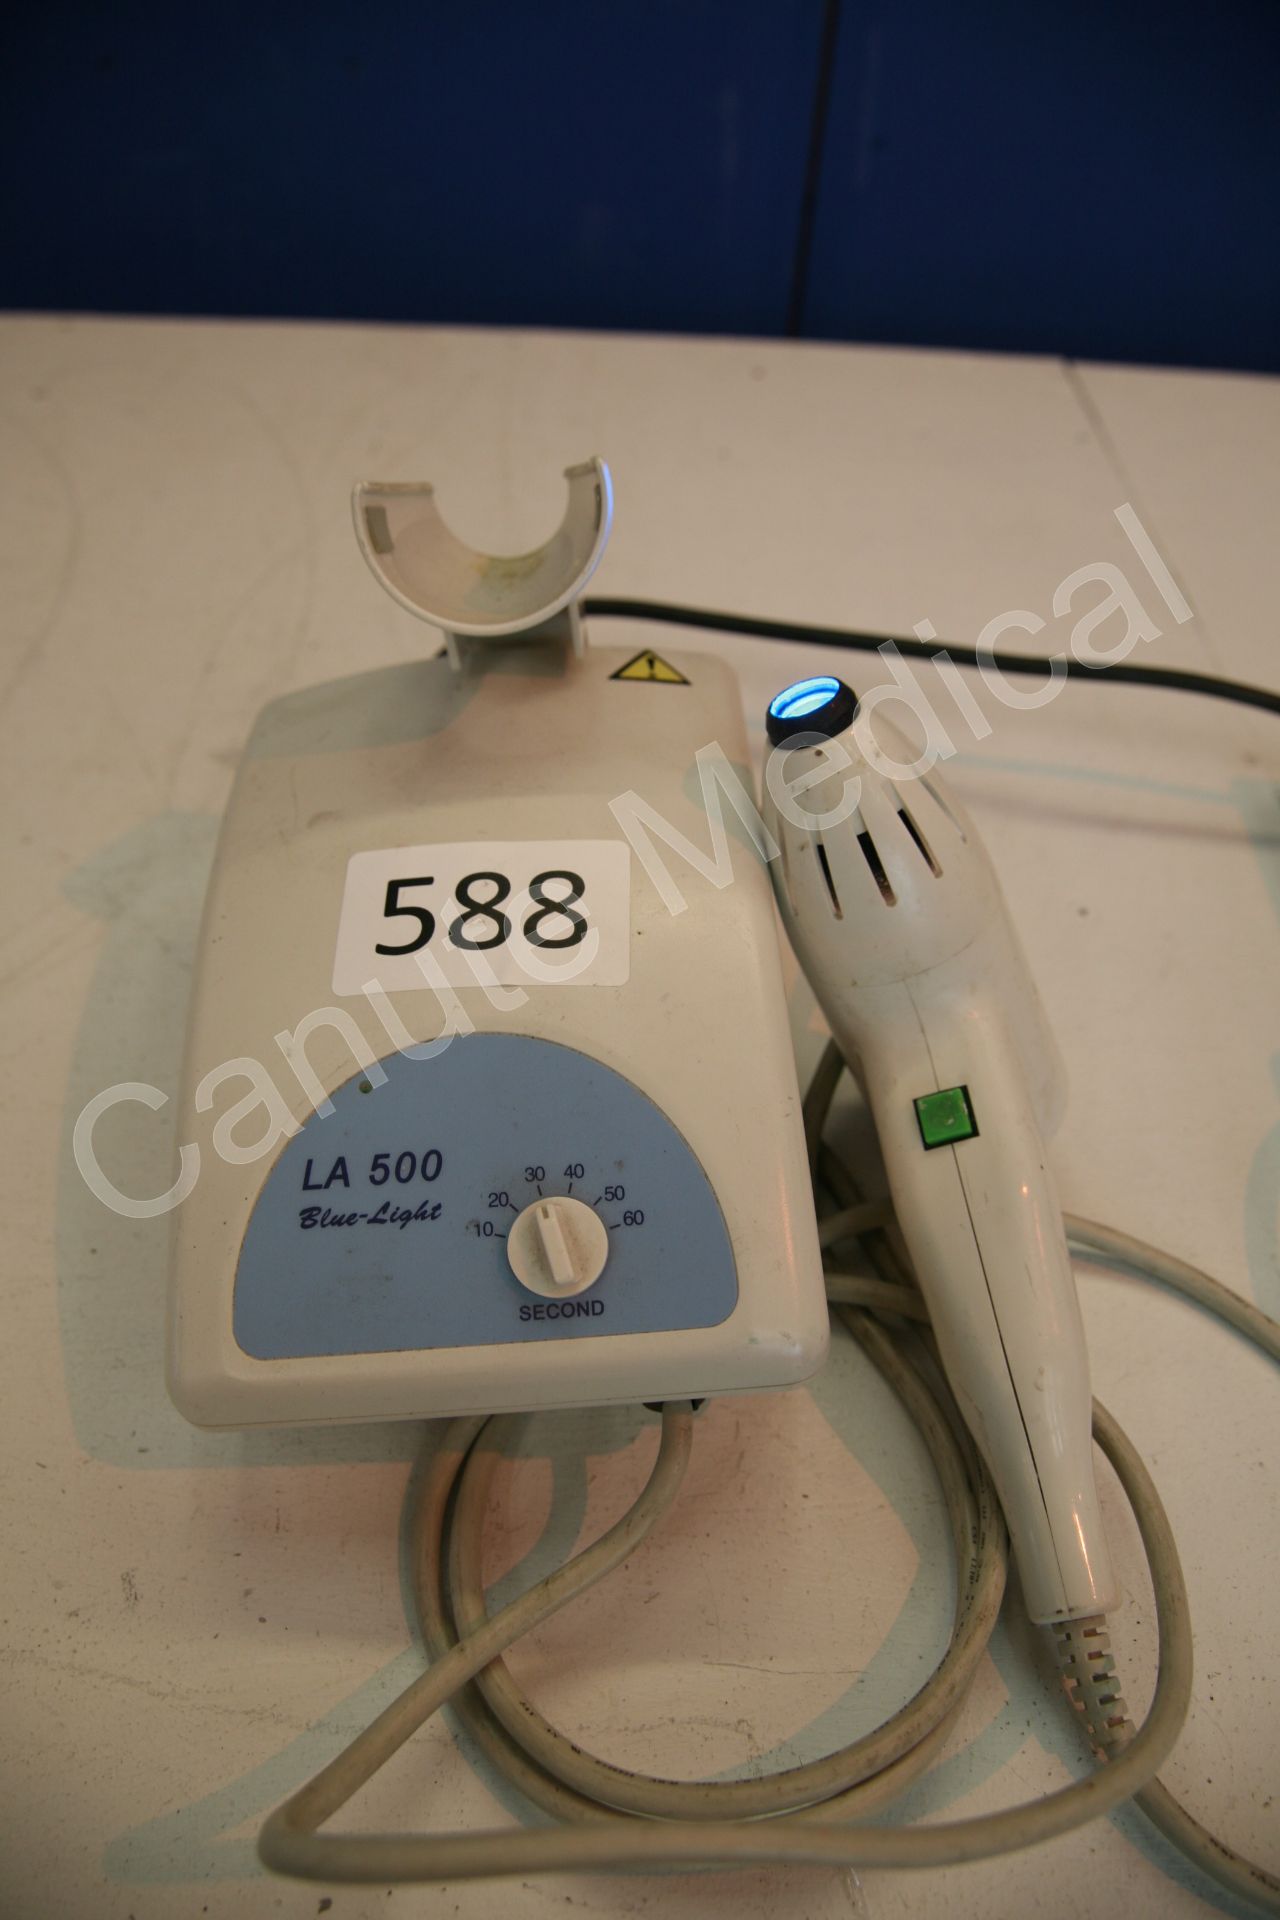 Apozaector LA 500 Dental Curing Light,